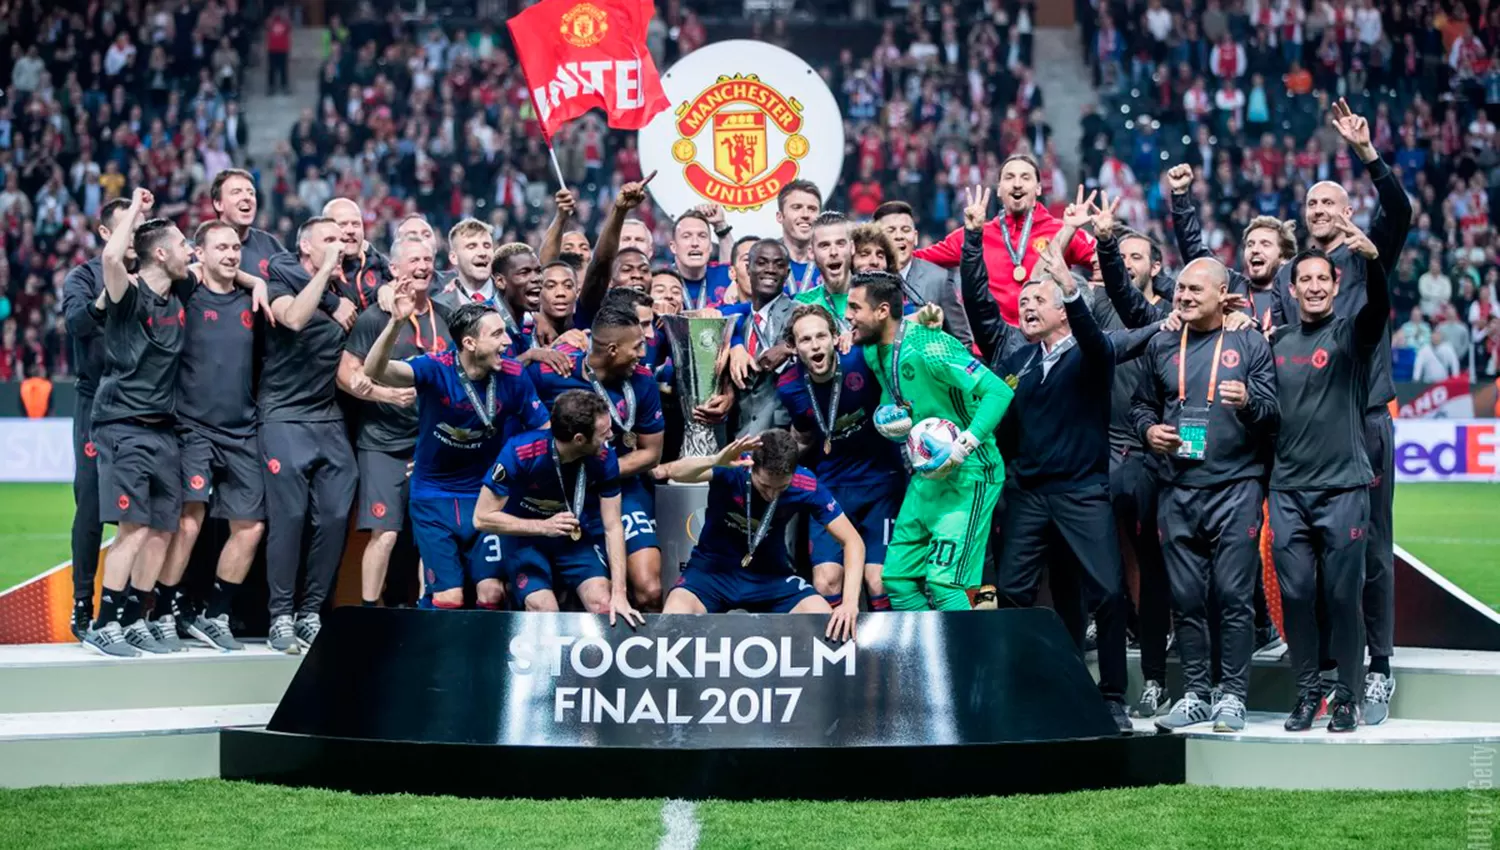 Manchester United viene de conquistar la  UEFA Europa League.
FOTO DE ARCHIVO